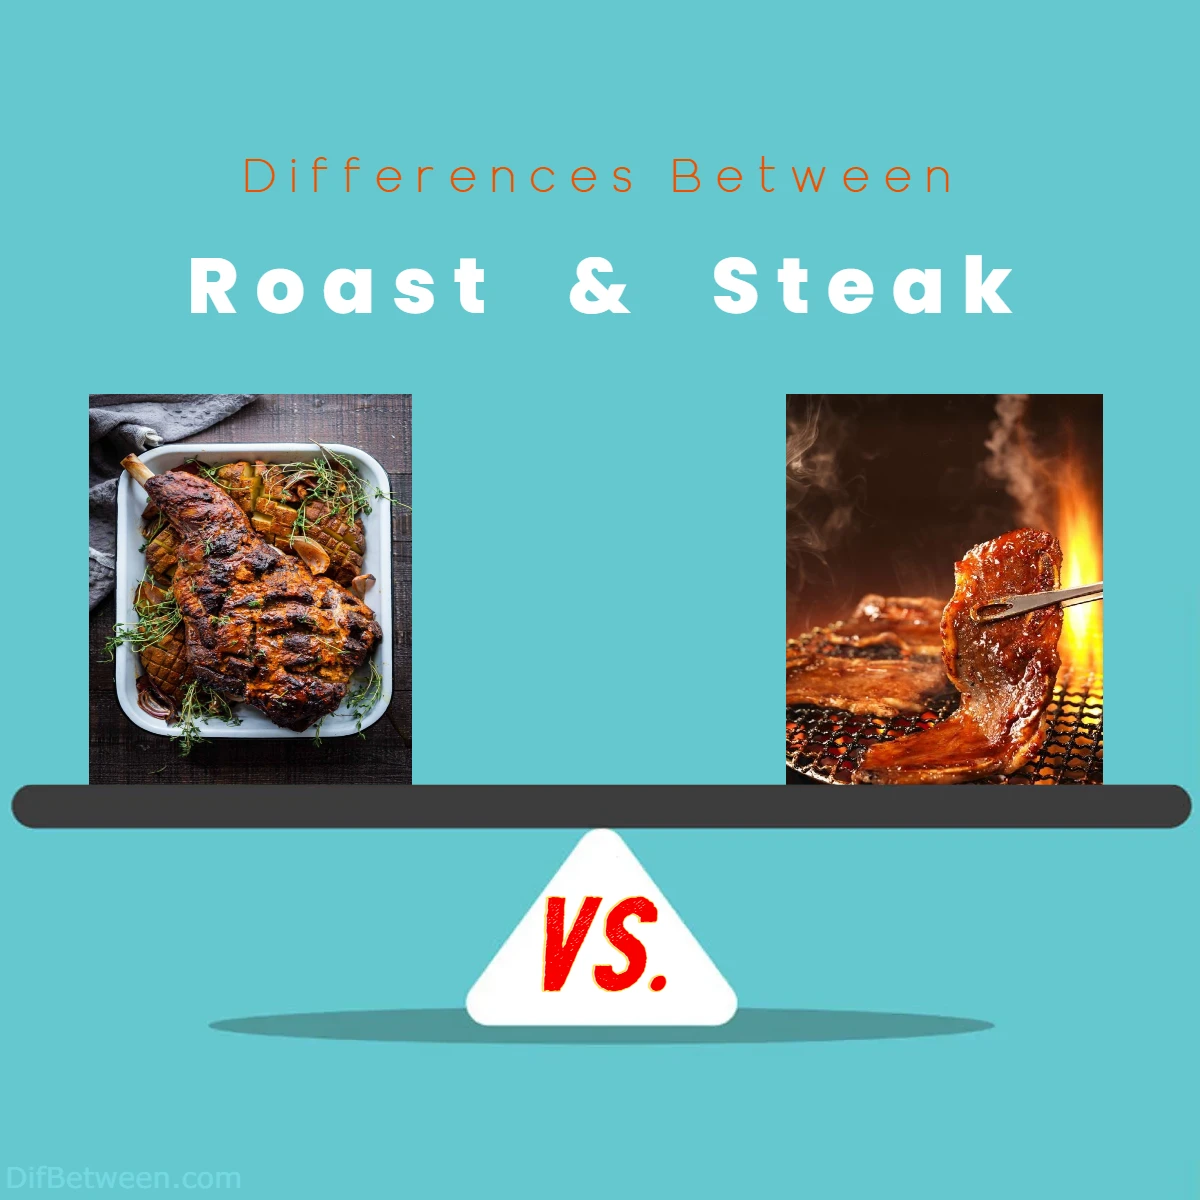 Differences Between Roast vs Steak